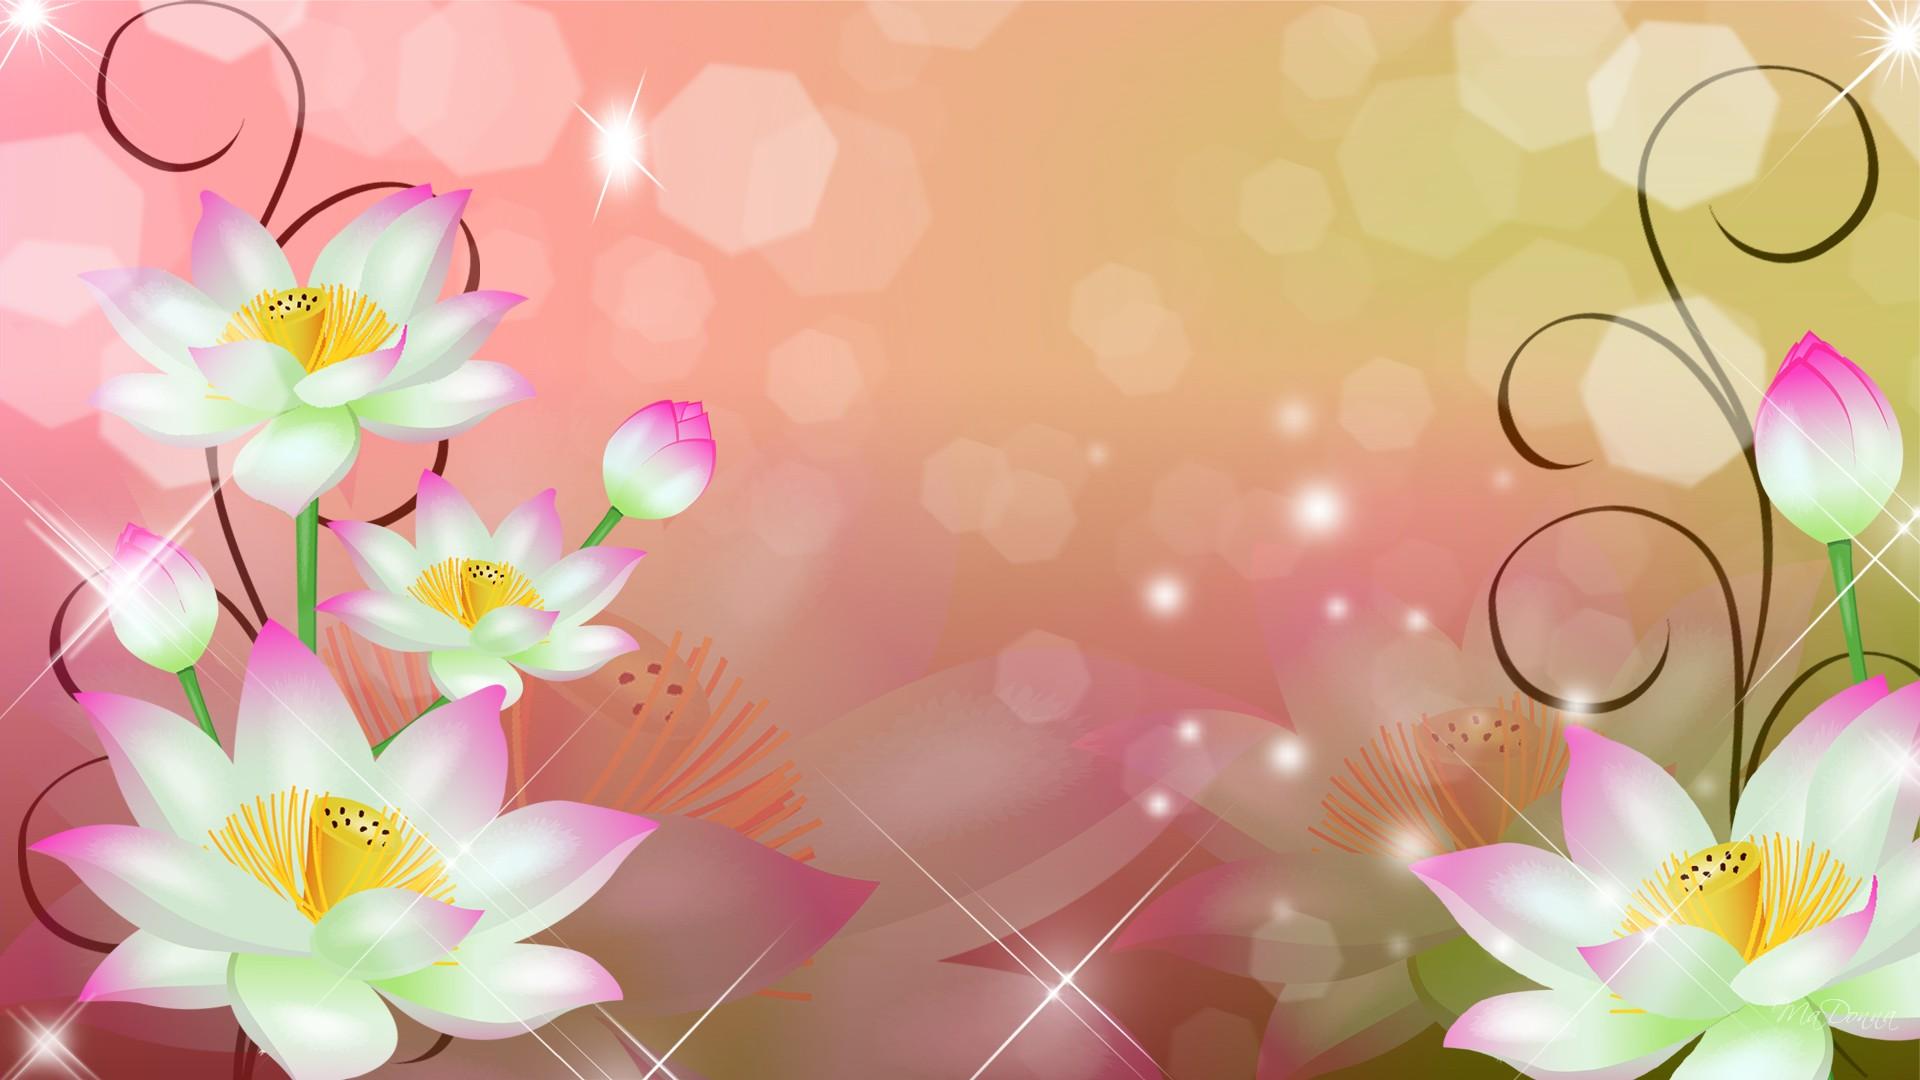 fondos de pantalla y fondos,pétalo,rosado,flor,primavera,frangipani